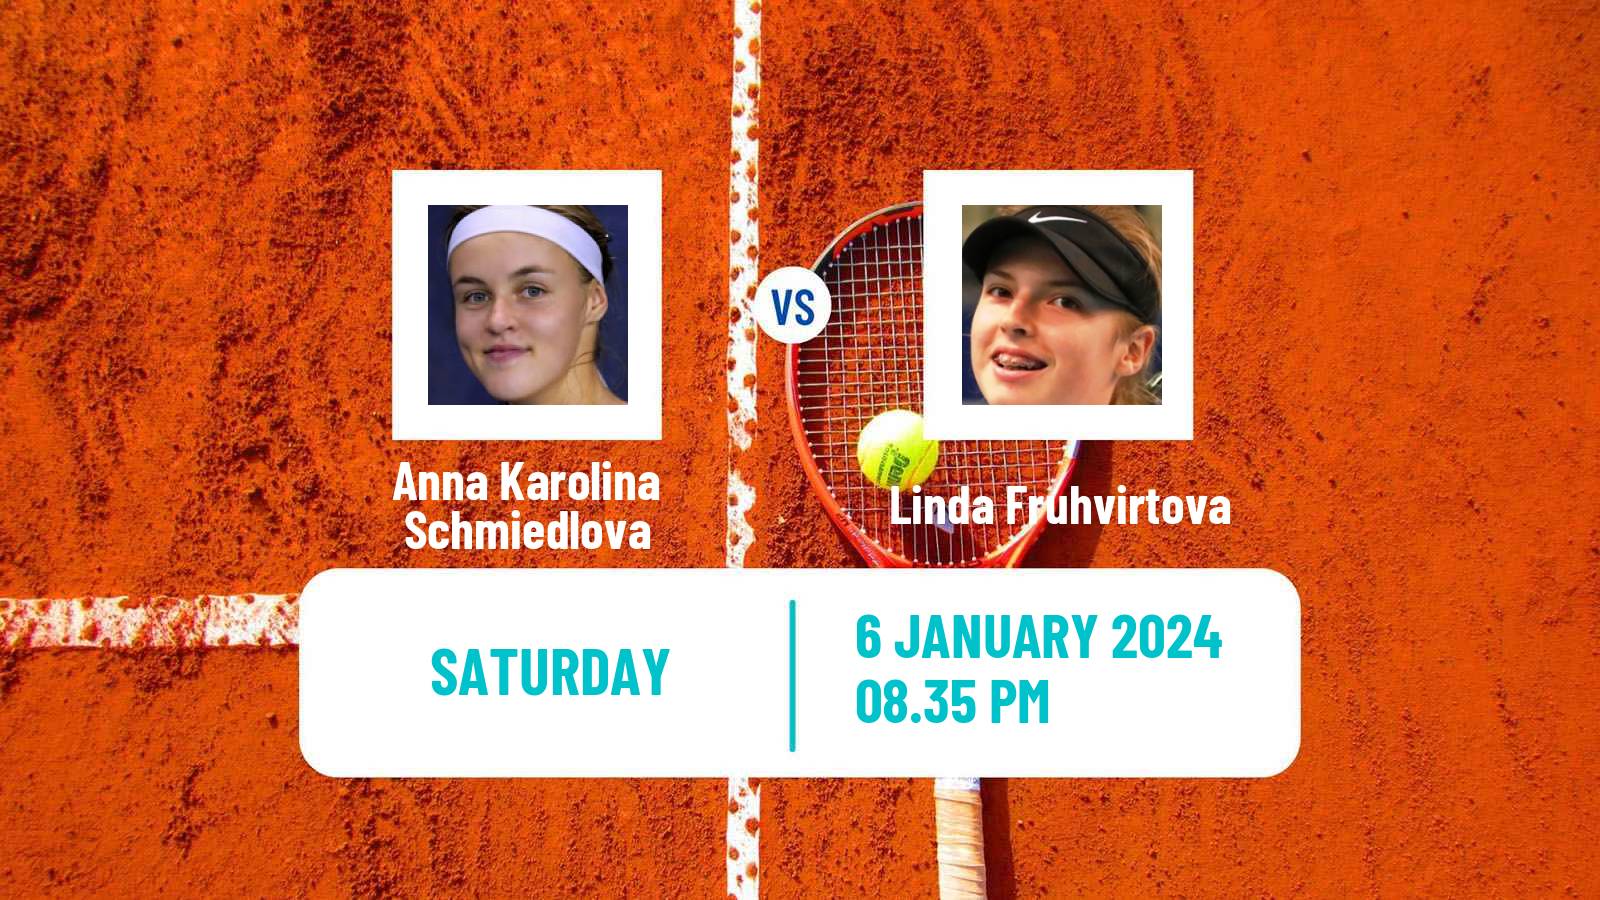 Tennis WTA Hobart Anna Karolina Schmiedlova - Linda Fruhvirtova